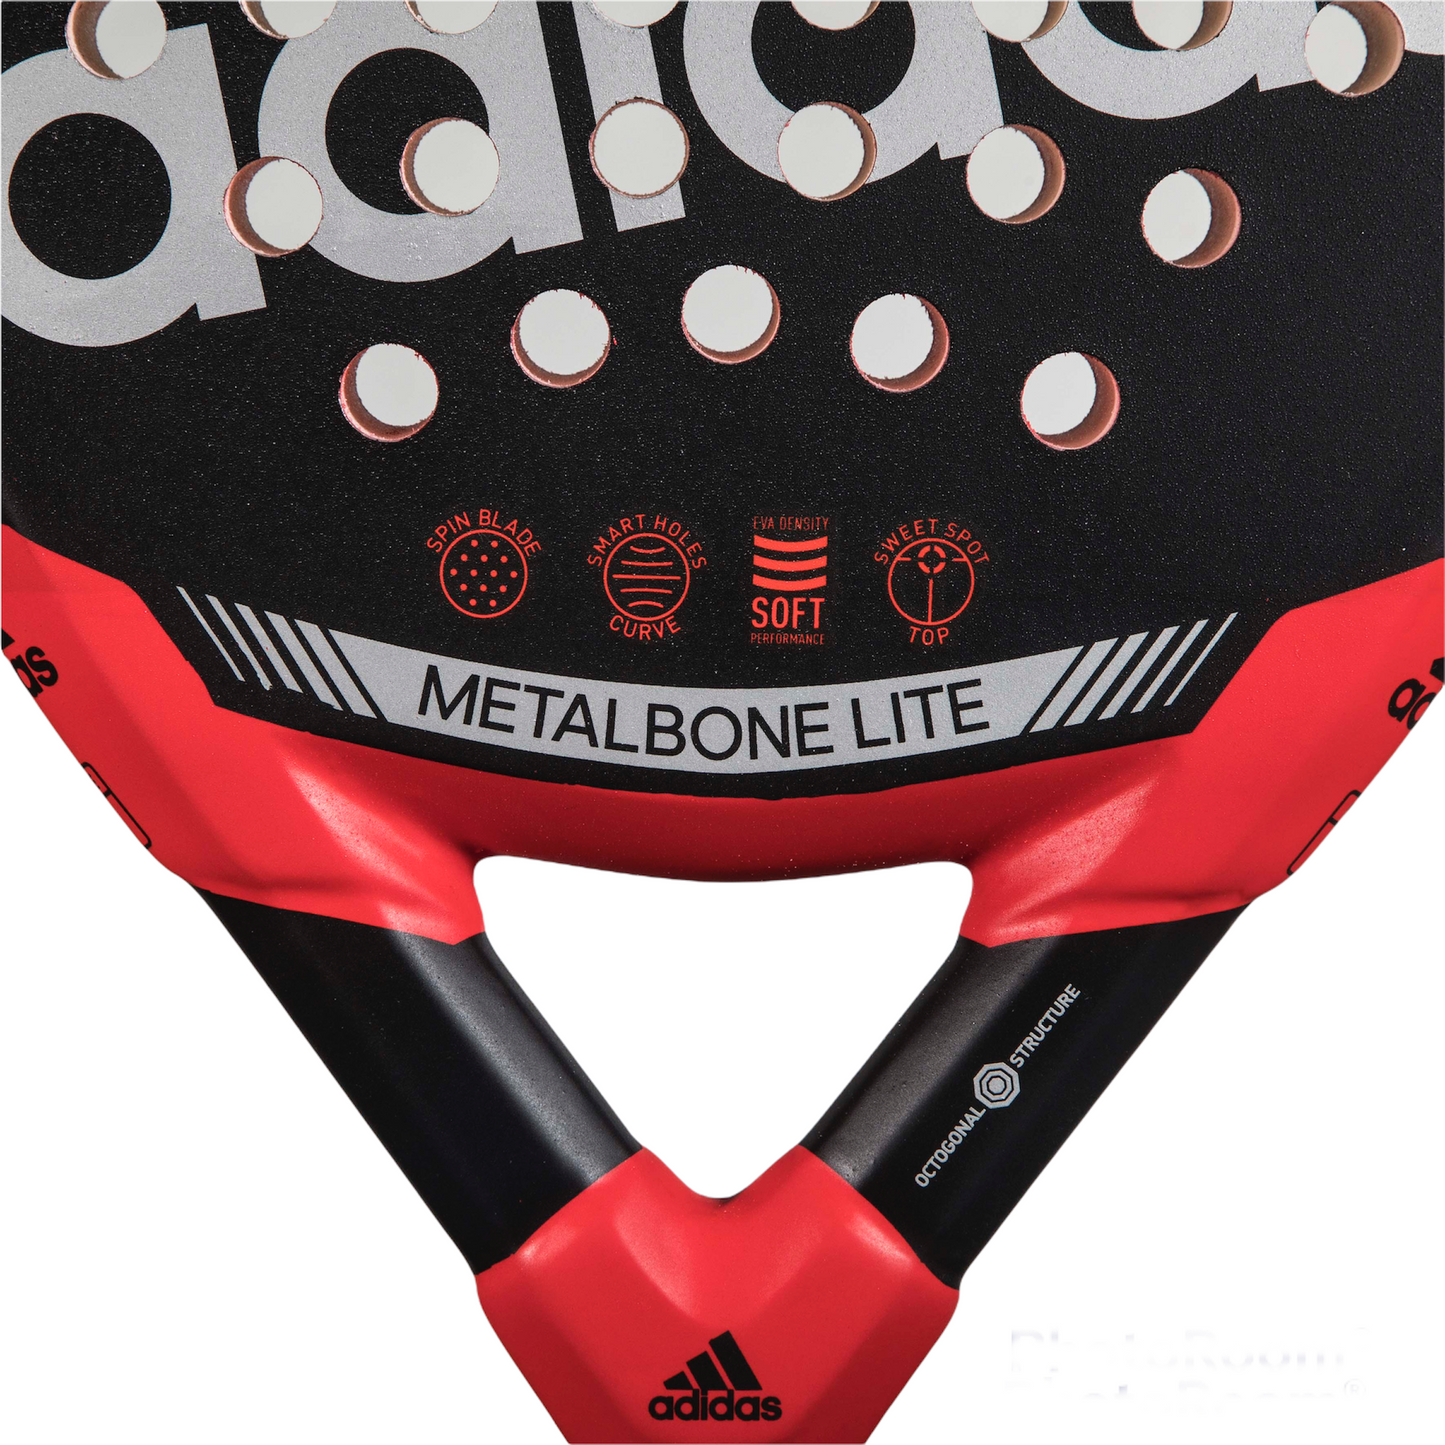 Adidas- Metalbone Lite 3.1 - Collezione 2022